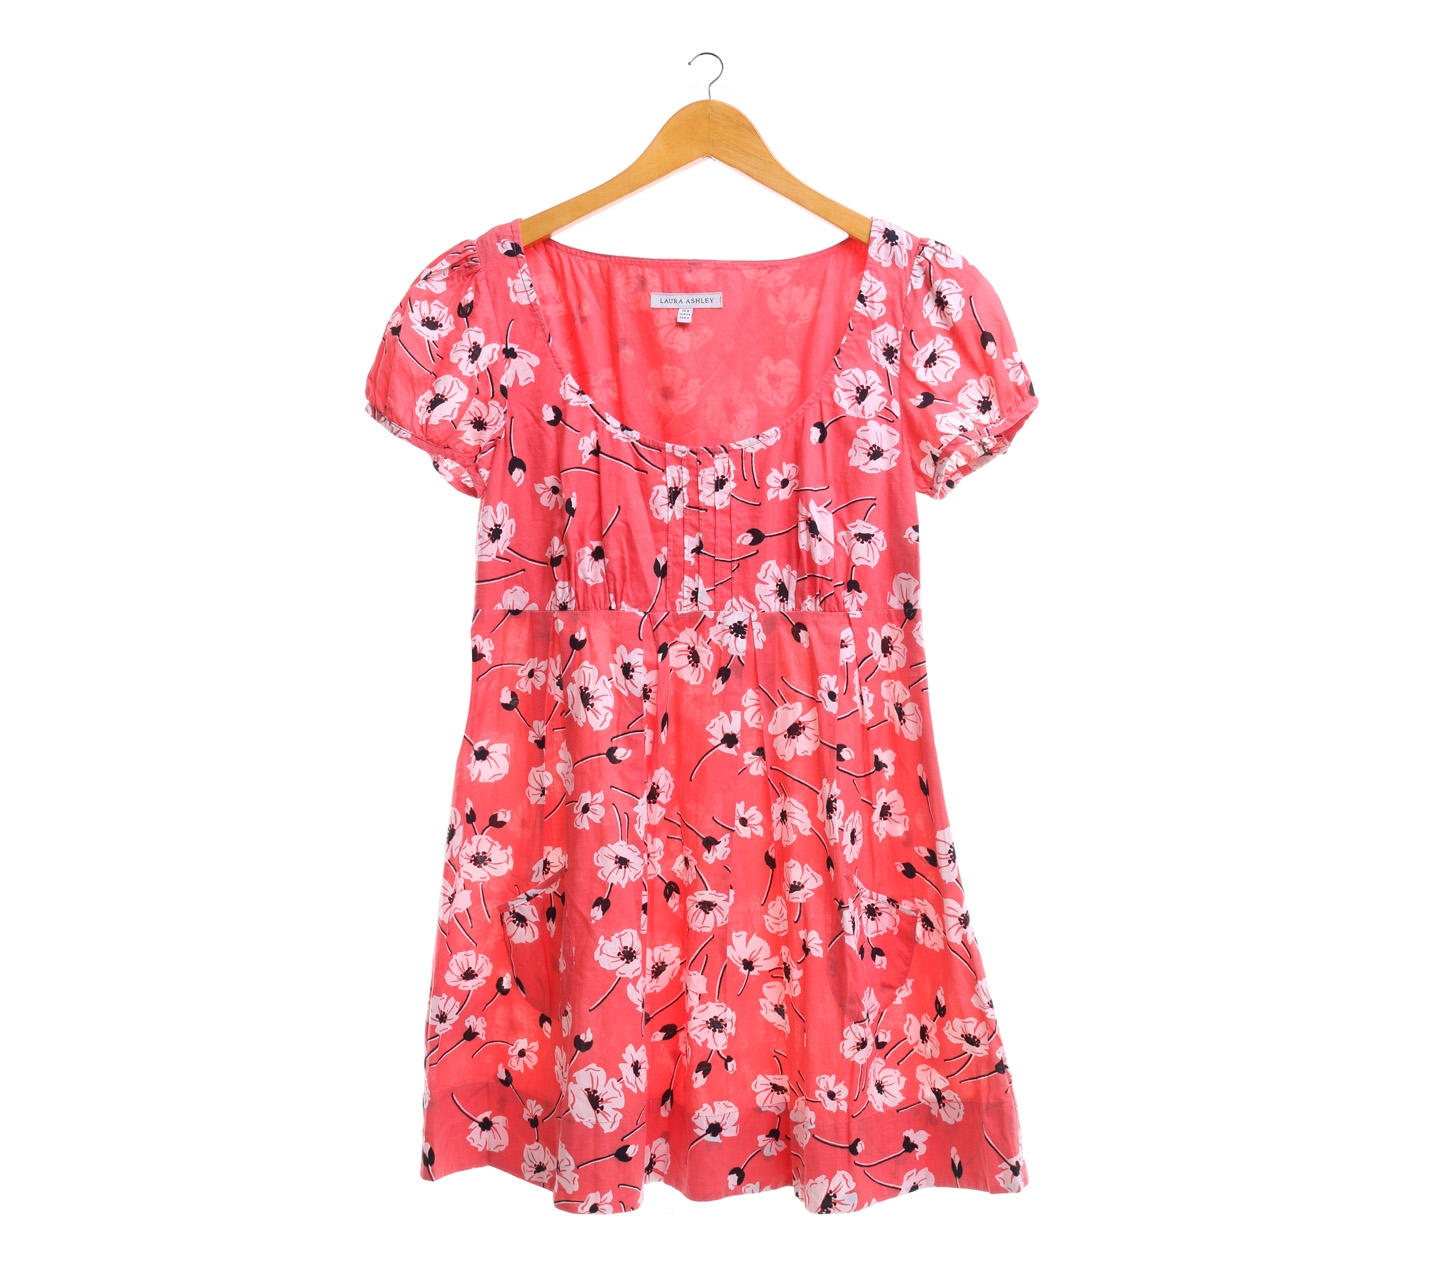 Laura Ashley Pink Floral Mini Dress